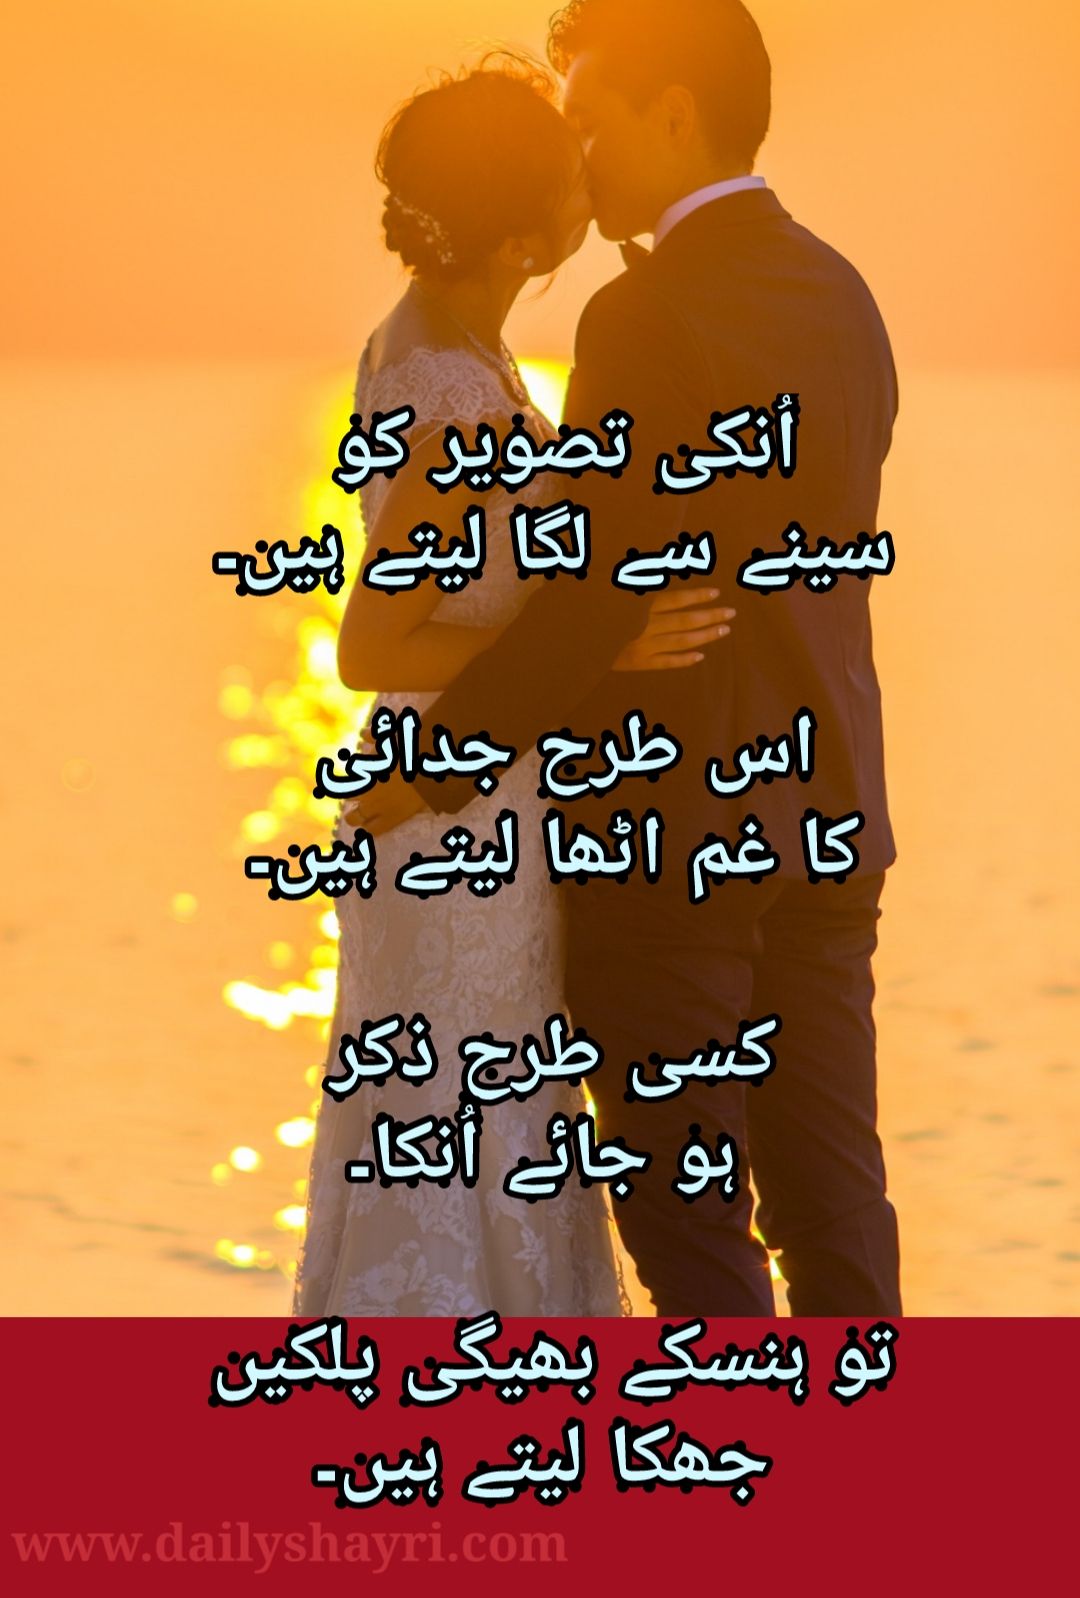 1000 New Judai Shayari Urdu Hd images – Hindi Shayari Love Shayari Love Quotes Hd Images